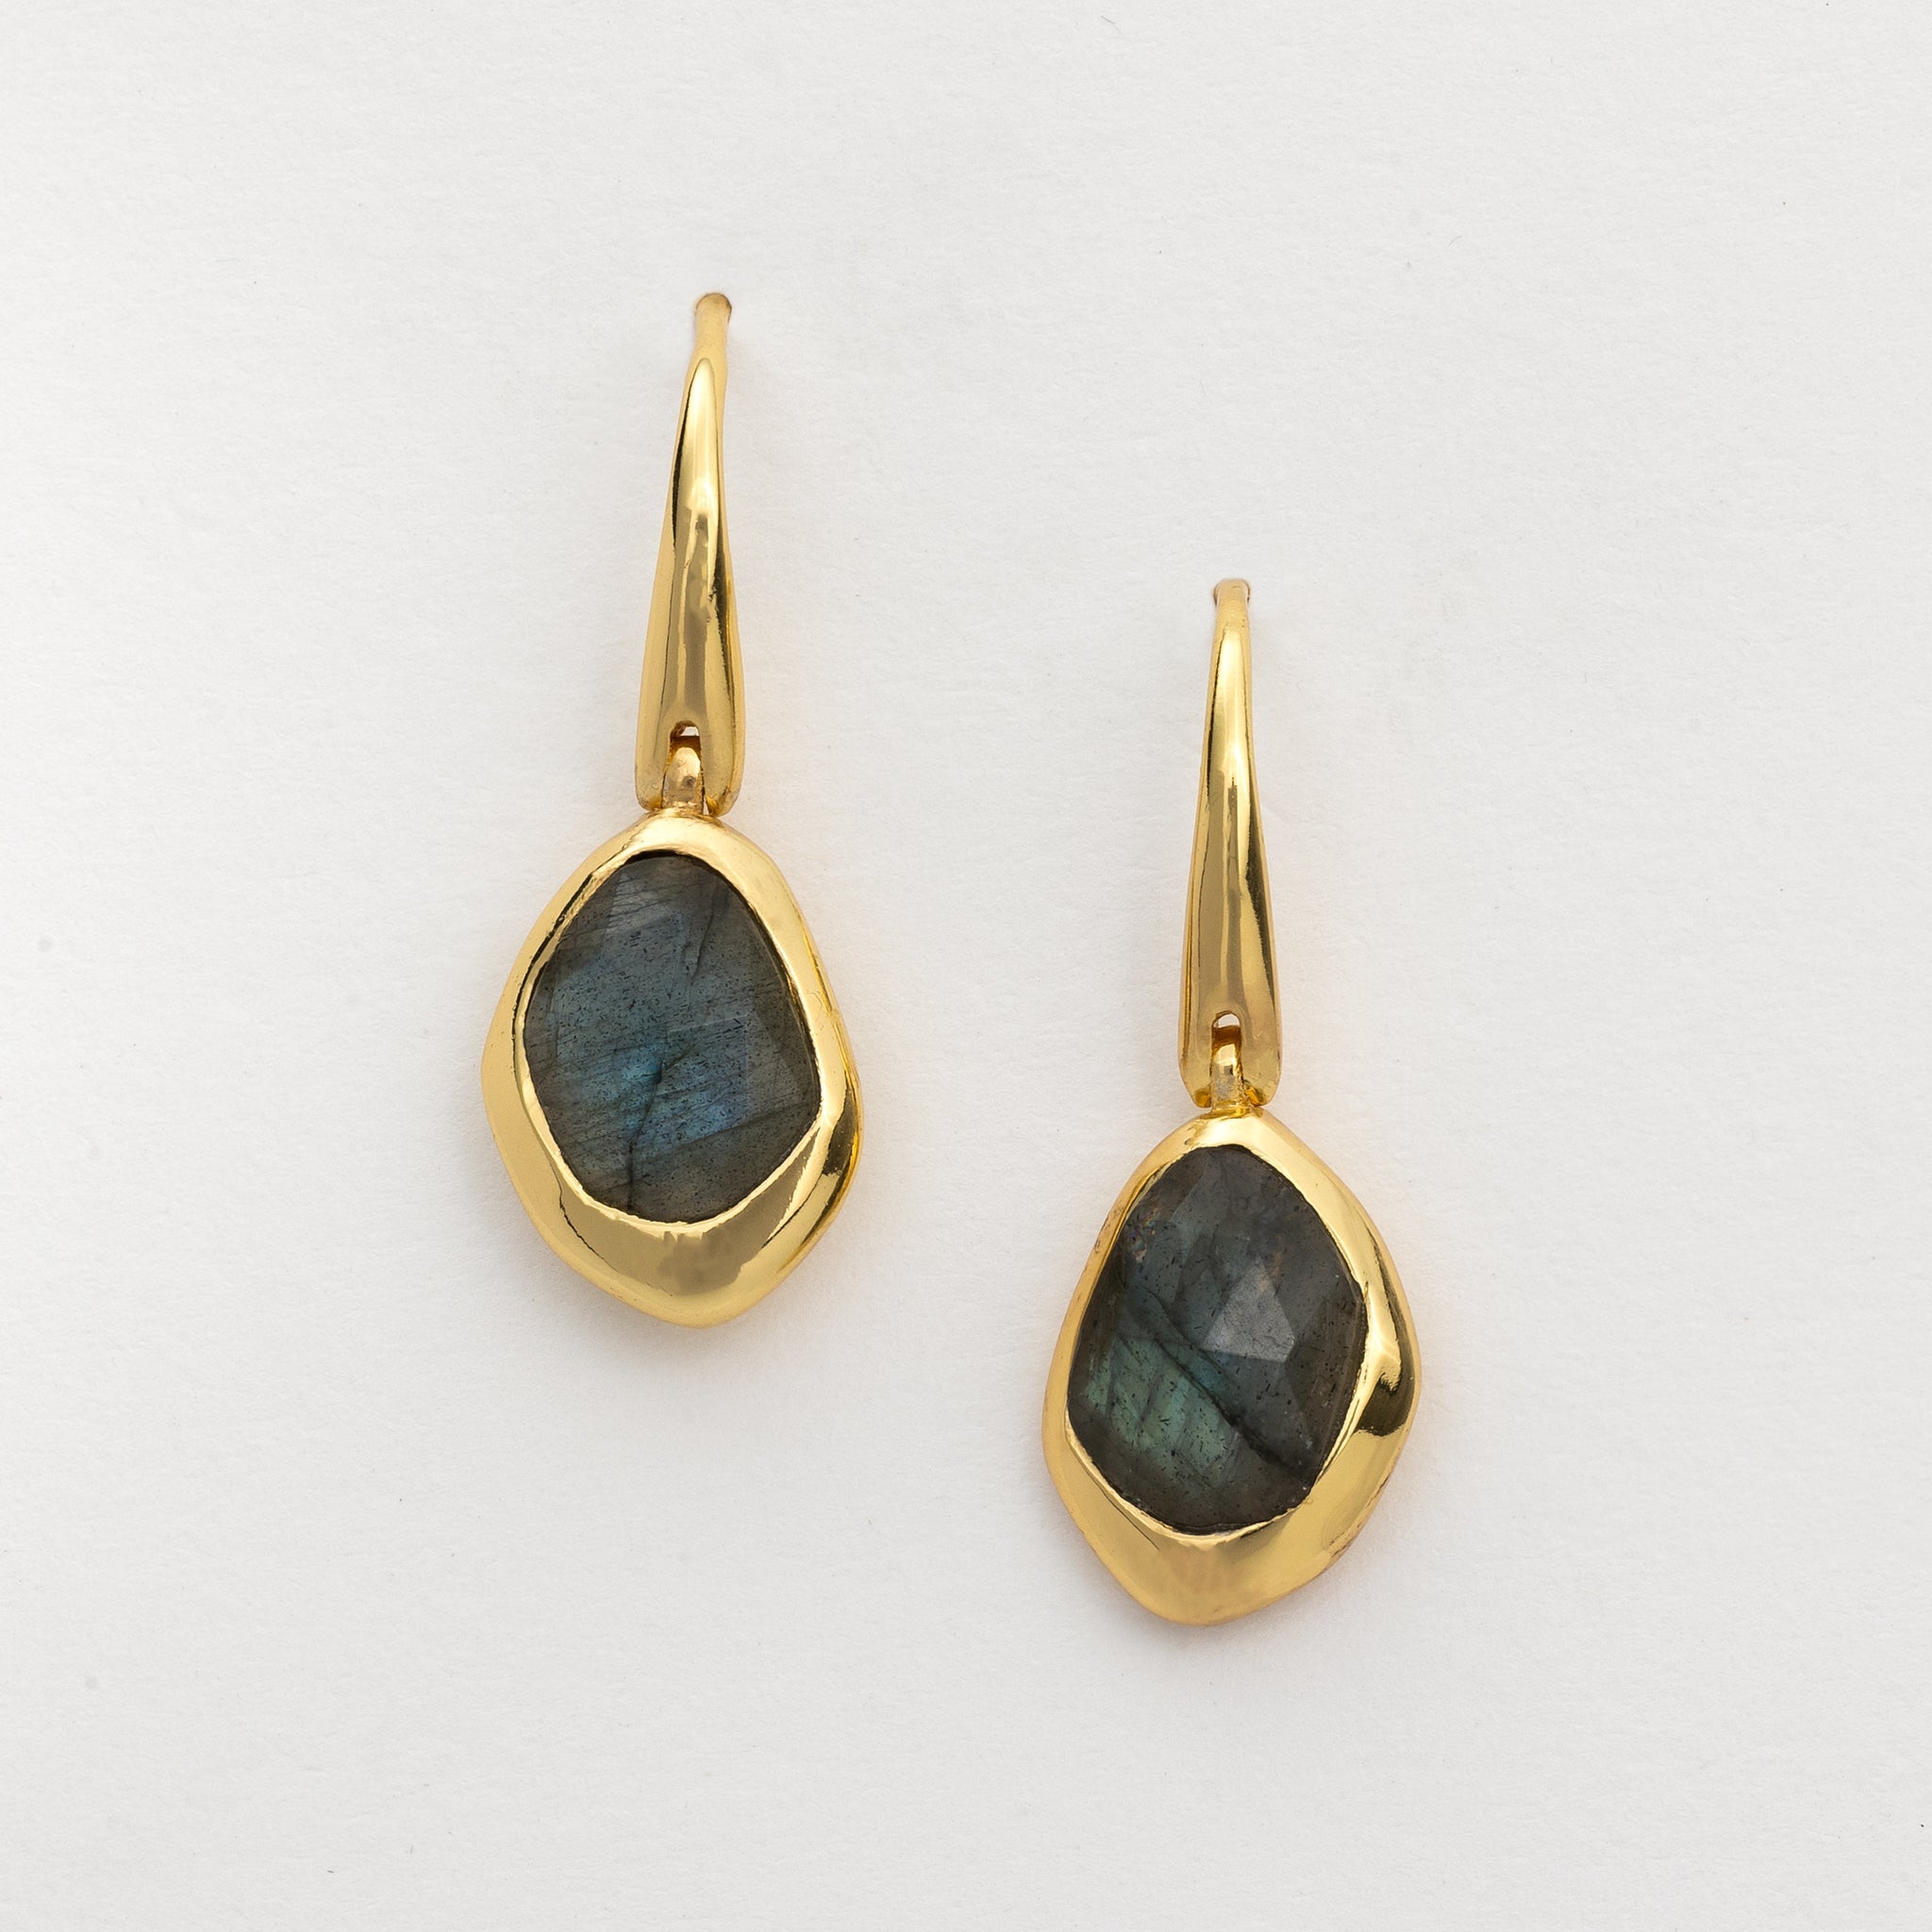 sterling silver and gold vermeil hook earrings in 8 stunning natural handcut gemstones, Aqua Chalcedony,Green Tourmaline,Rose Quartz,Labradorite,Garnet,Iolite,Black Onyx,Moonstone